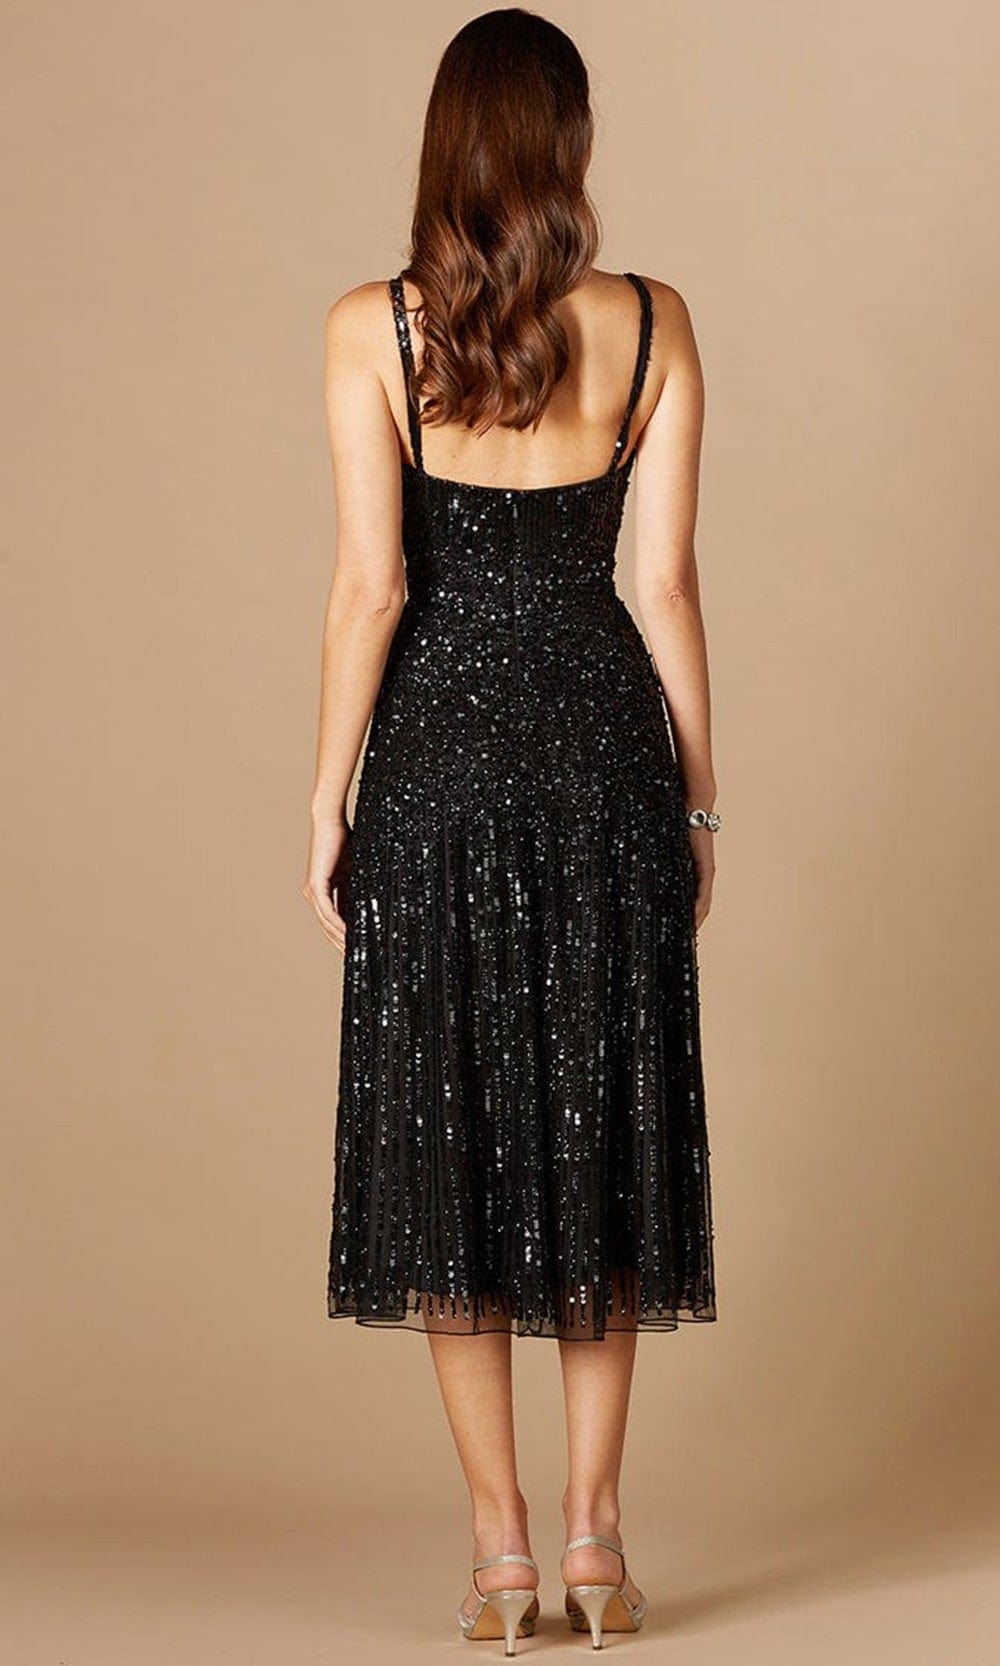 Lara Dresses 29347 - Glittery Sequined Sleeveless Tea Length Dress Special Occasion Dress